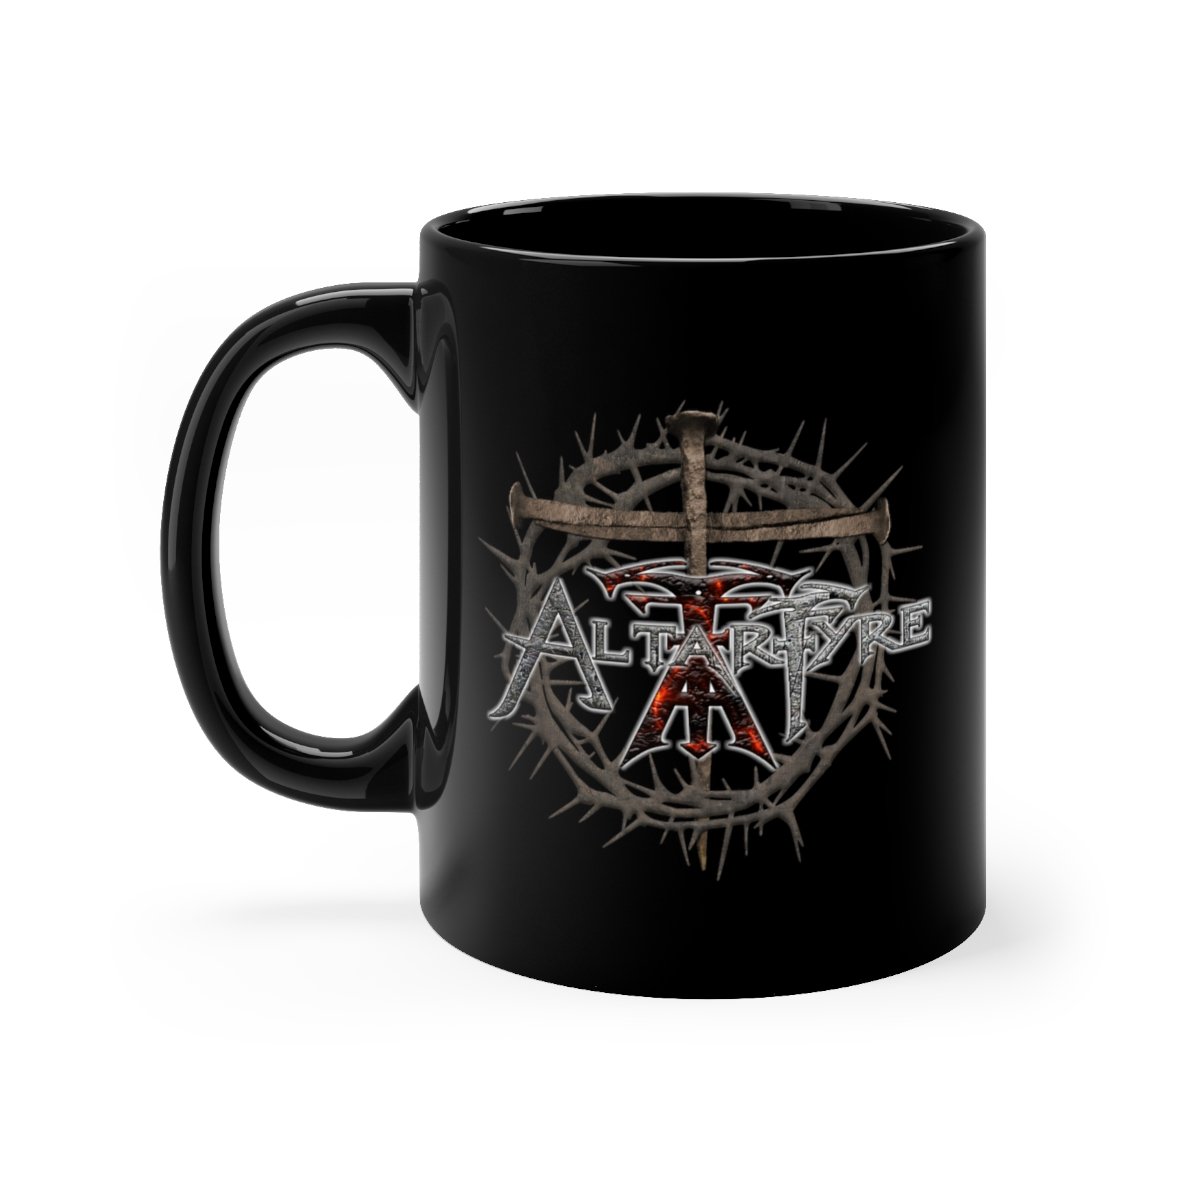 Altarfyre Logo Black mug 11oz